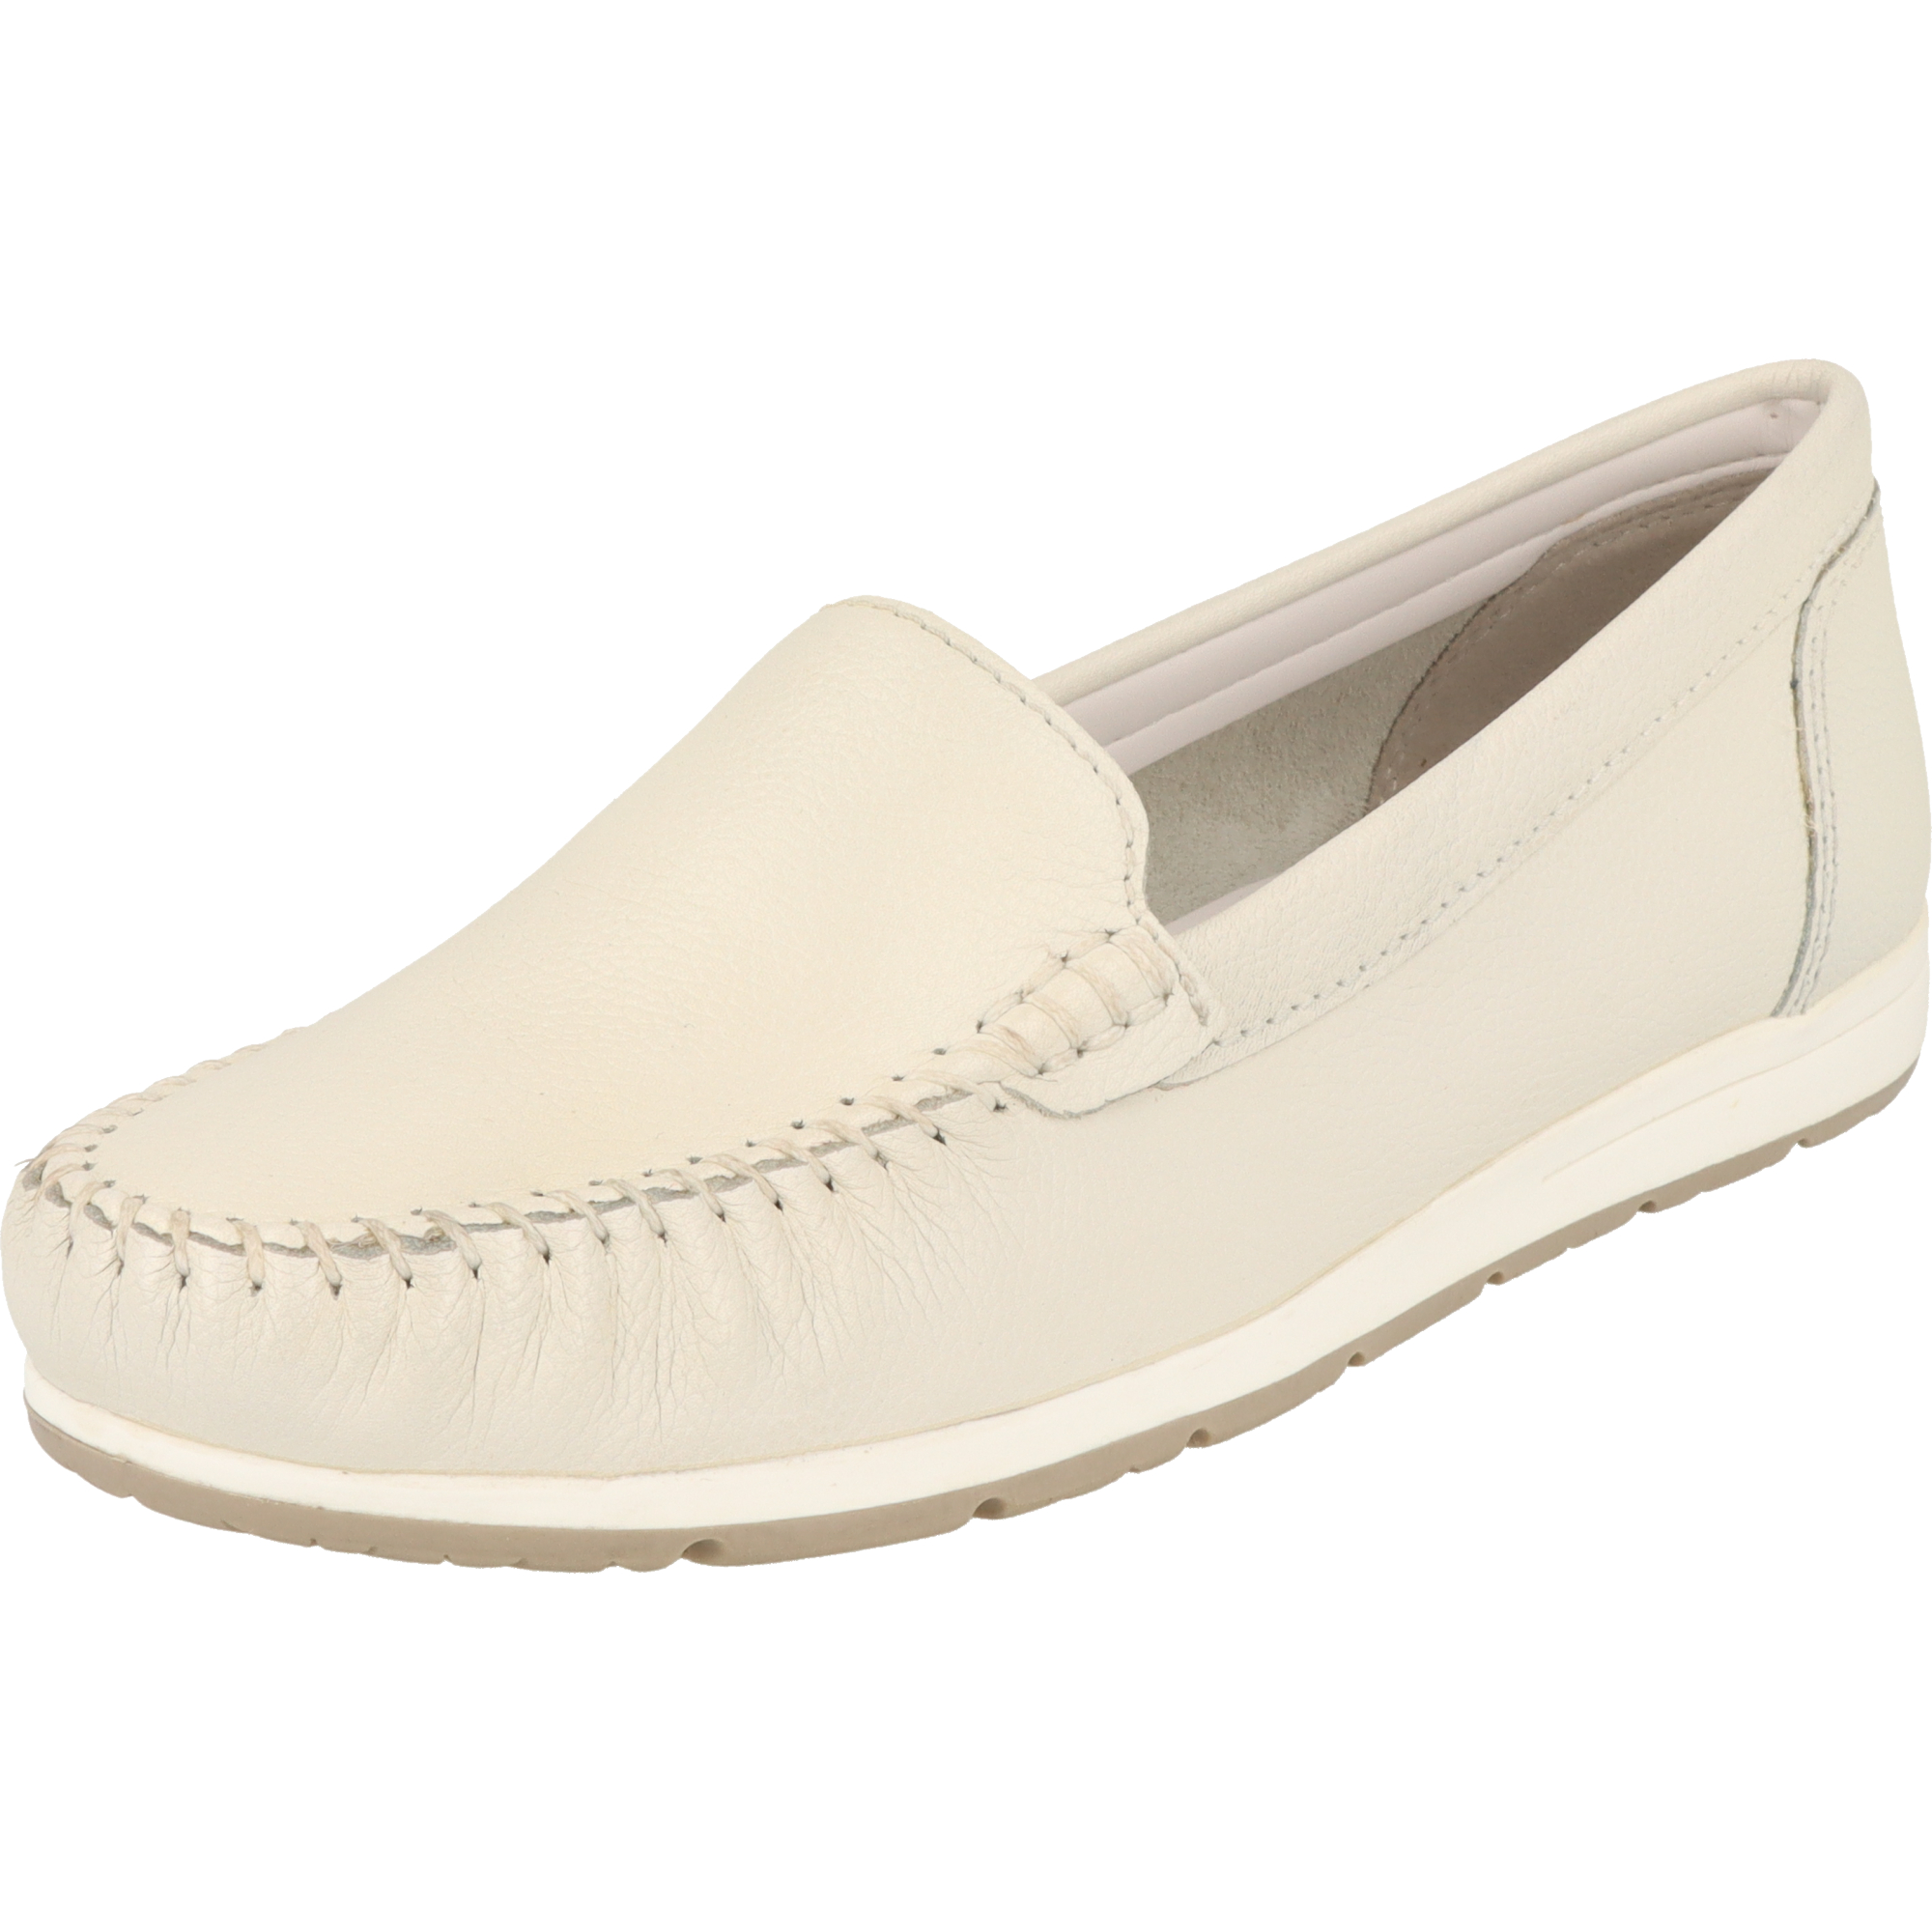 Marco Tozzi 2-24600-42 Damen Schuhe Komfort Leder Mokassins White